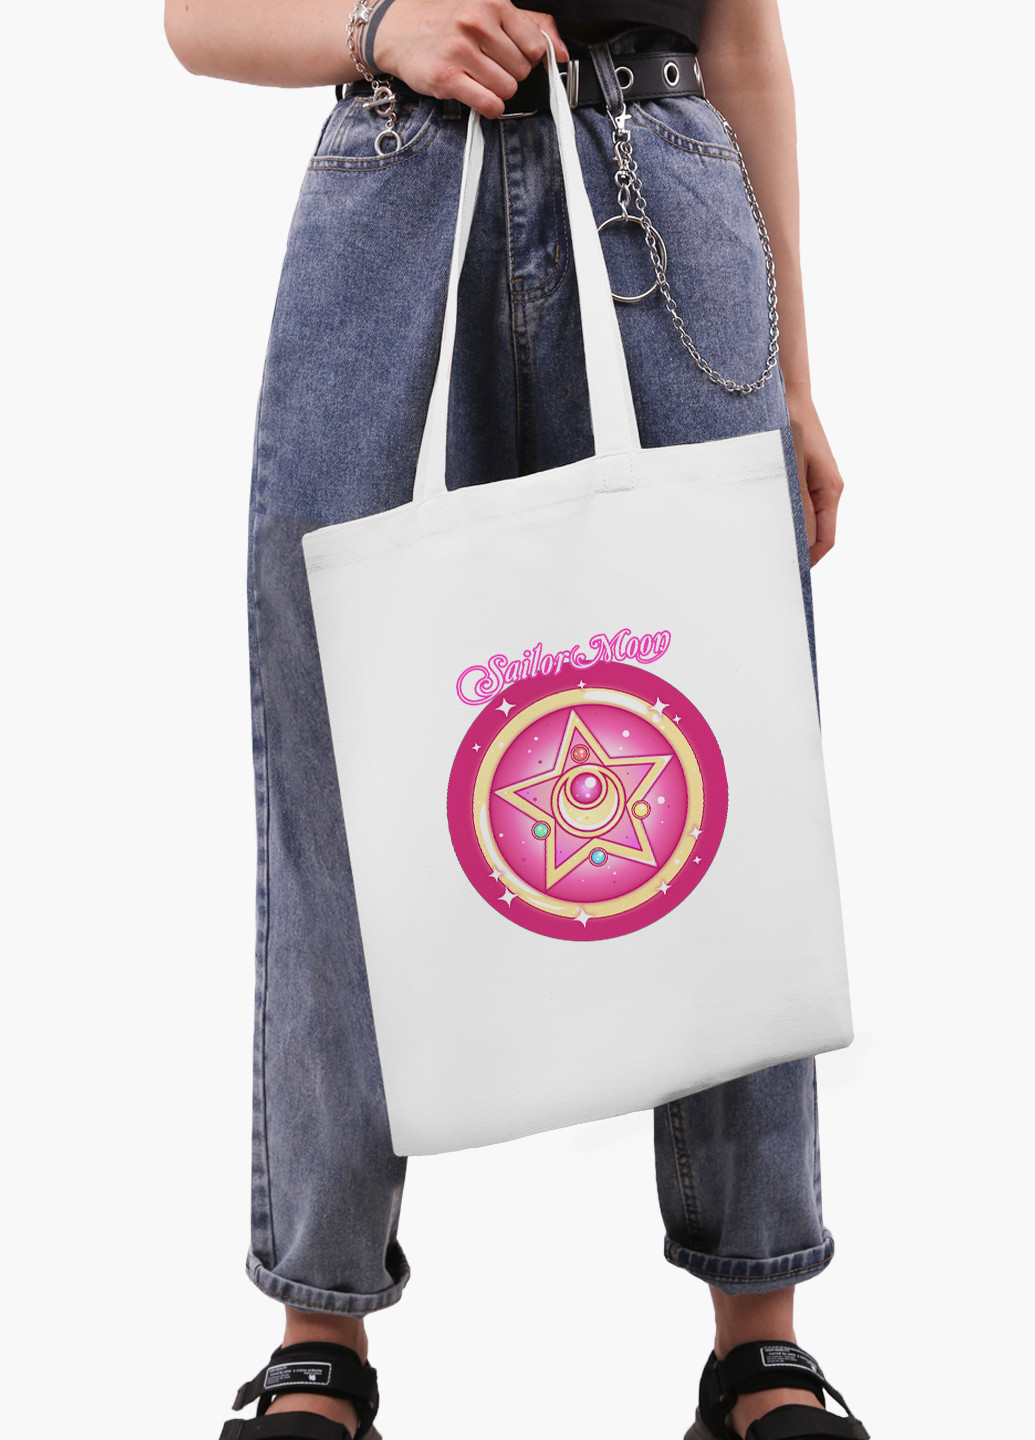 Эко сумка шоппер белая Сейлор Мун (Sailor Moon) (9227-2918-WT-2) экосумка шопер 41*35 см MobiPrint (224806186)